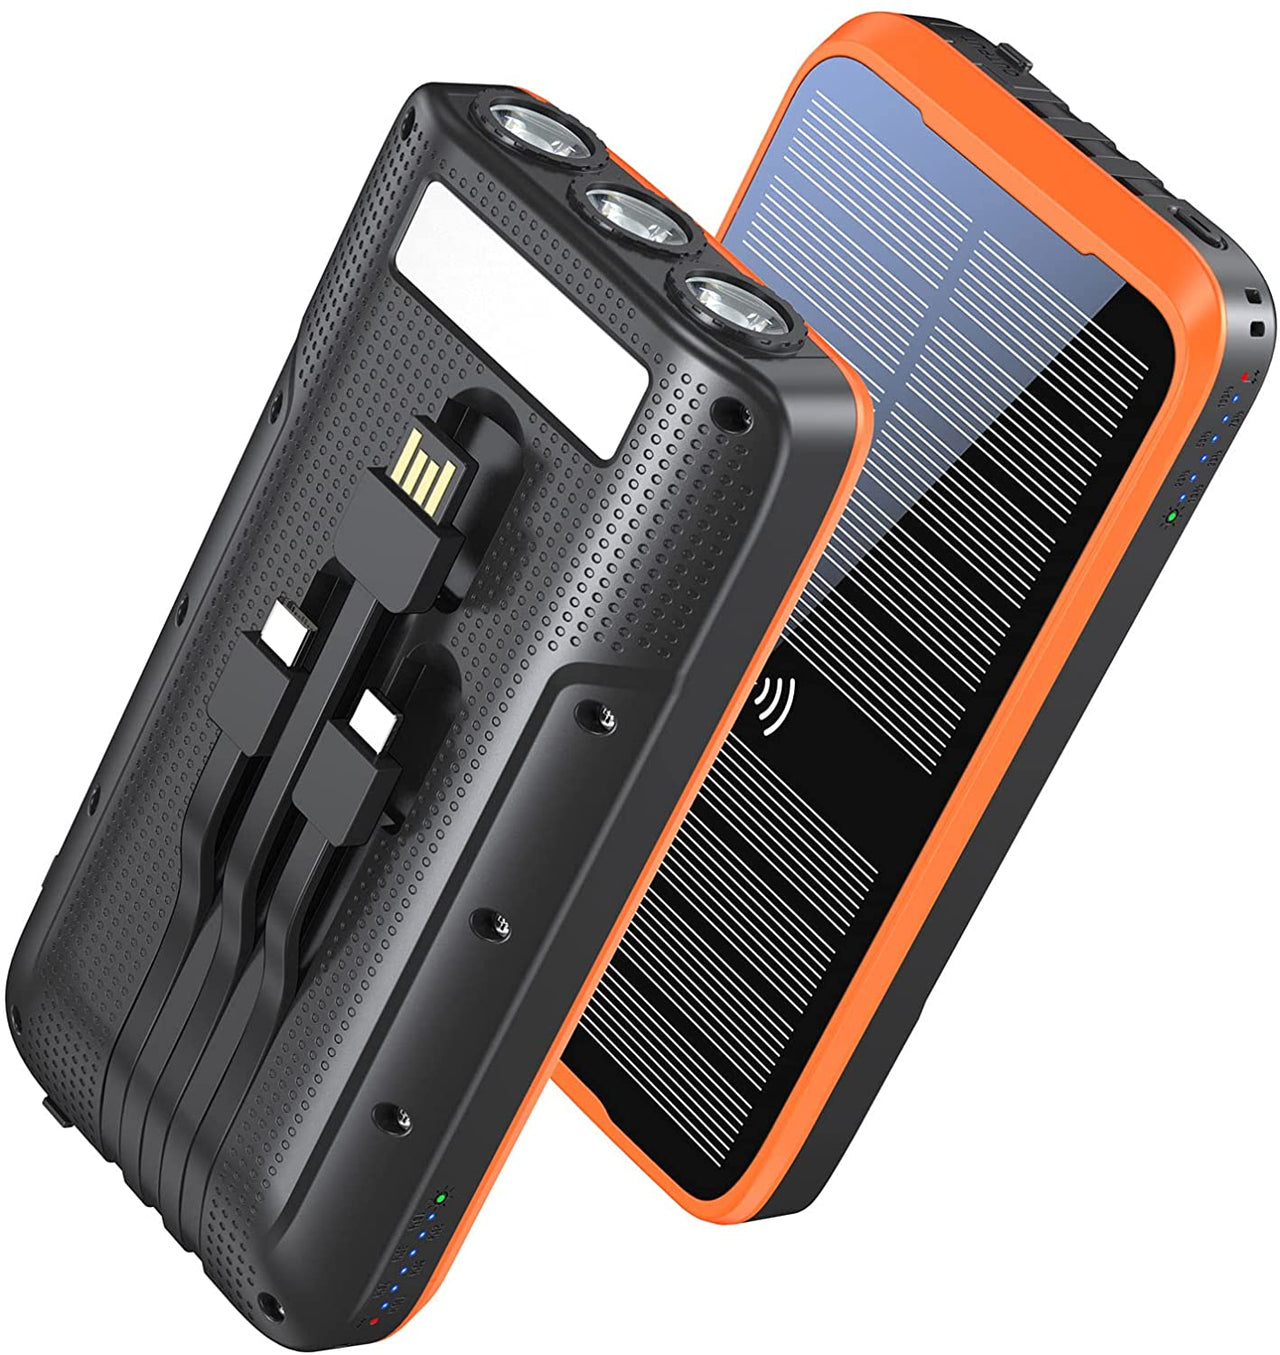 Cargador Solar Portatil Para Celular Bateria Externa 2 Puertos Light Power  Bank